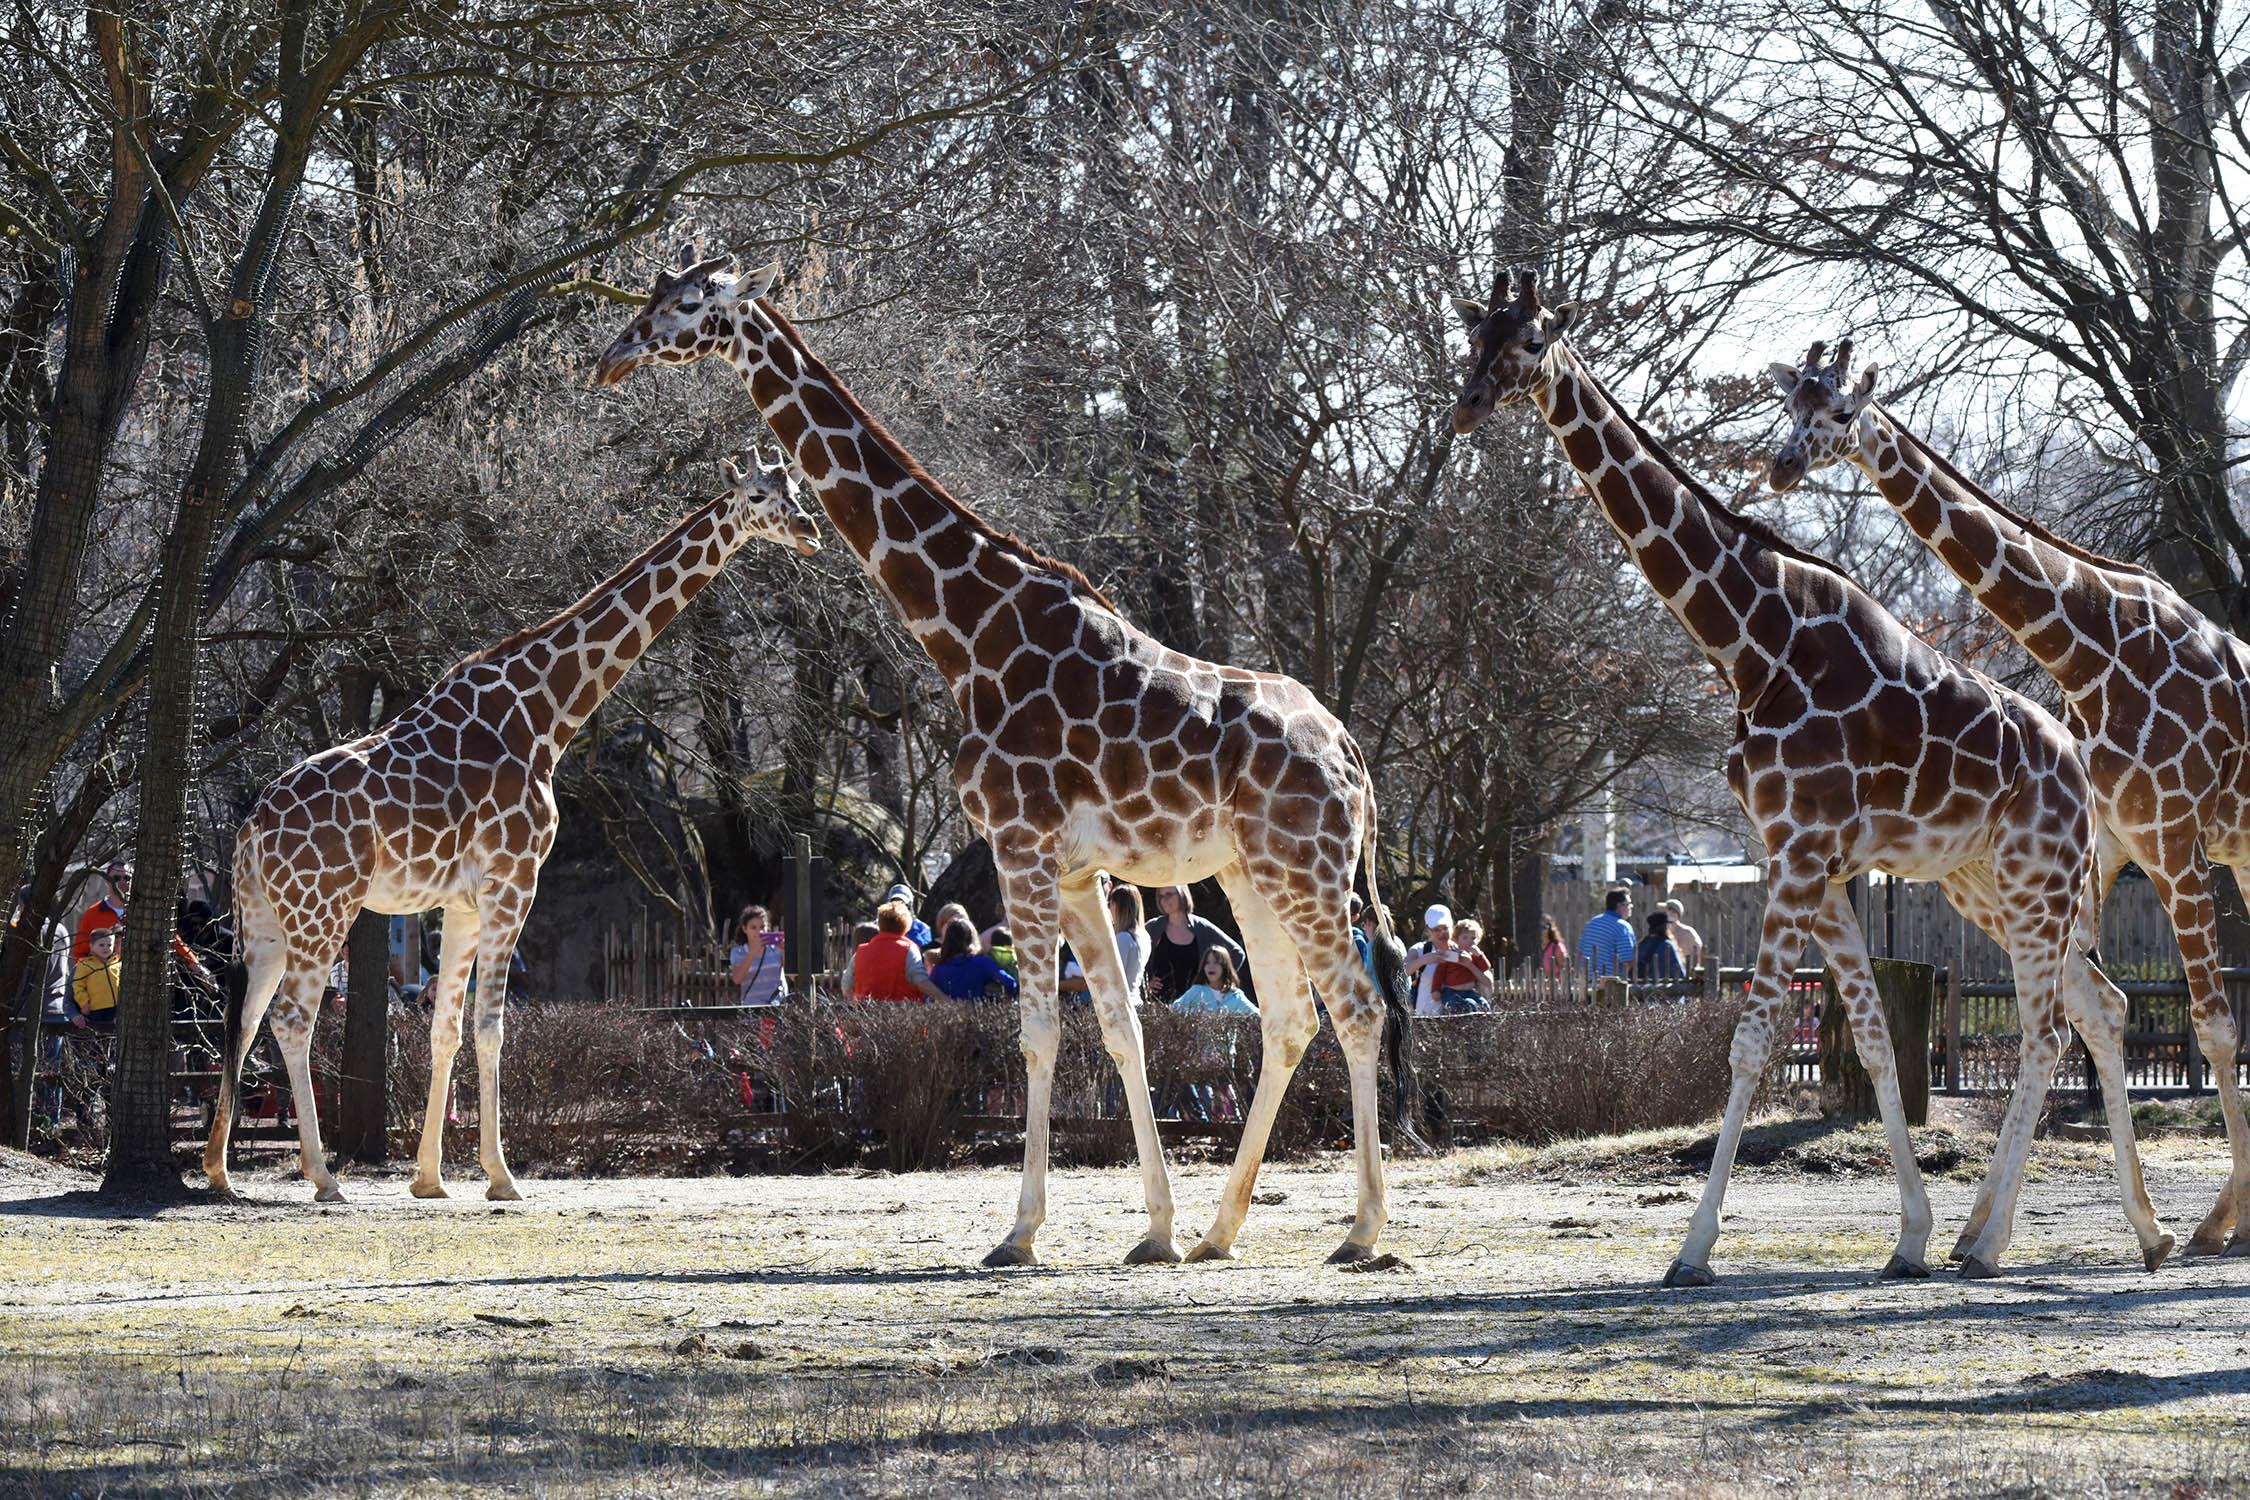 Brookfield Zoo’s four giraffes: Mithra, 26; Jasari, 11; Arnieta, 10; and Potoka, 3. (Courtesy of Brookfield Zoo)